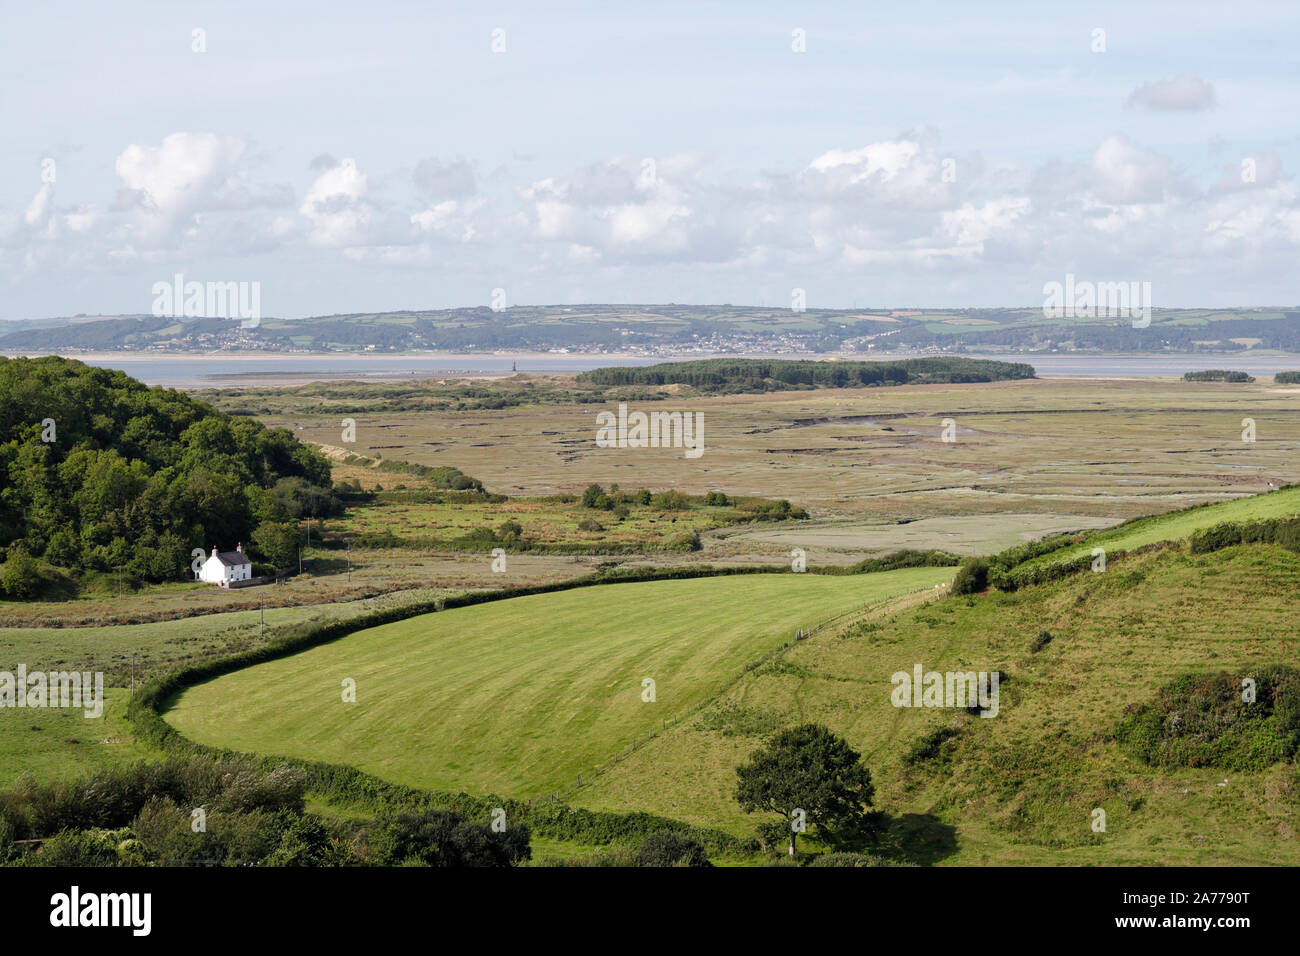 The Loughor estuary, Gower Peninsula, Llanmadoc, Wales UK, scenic view countryside, Welsh coast coastline. British rural landscape, natural beauty Stock Photo